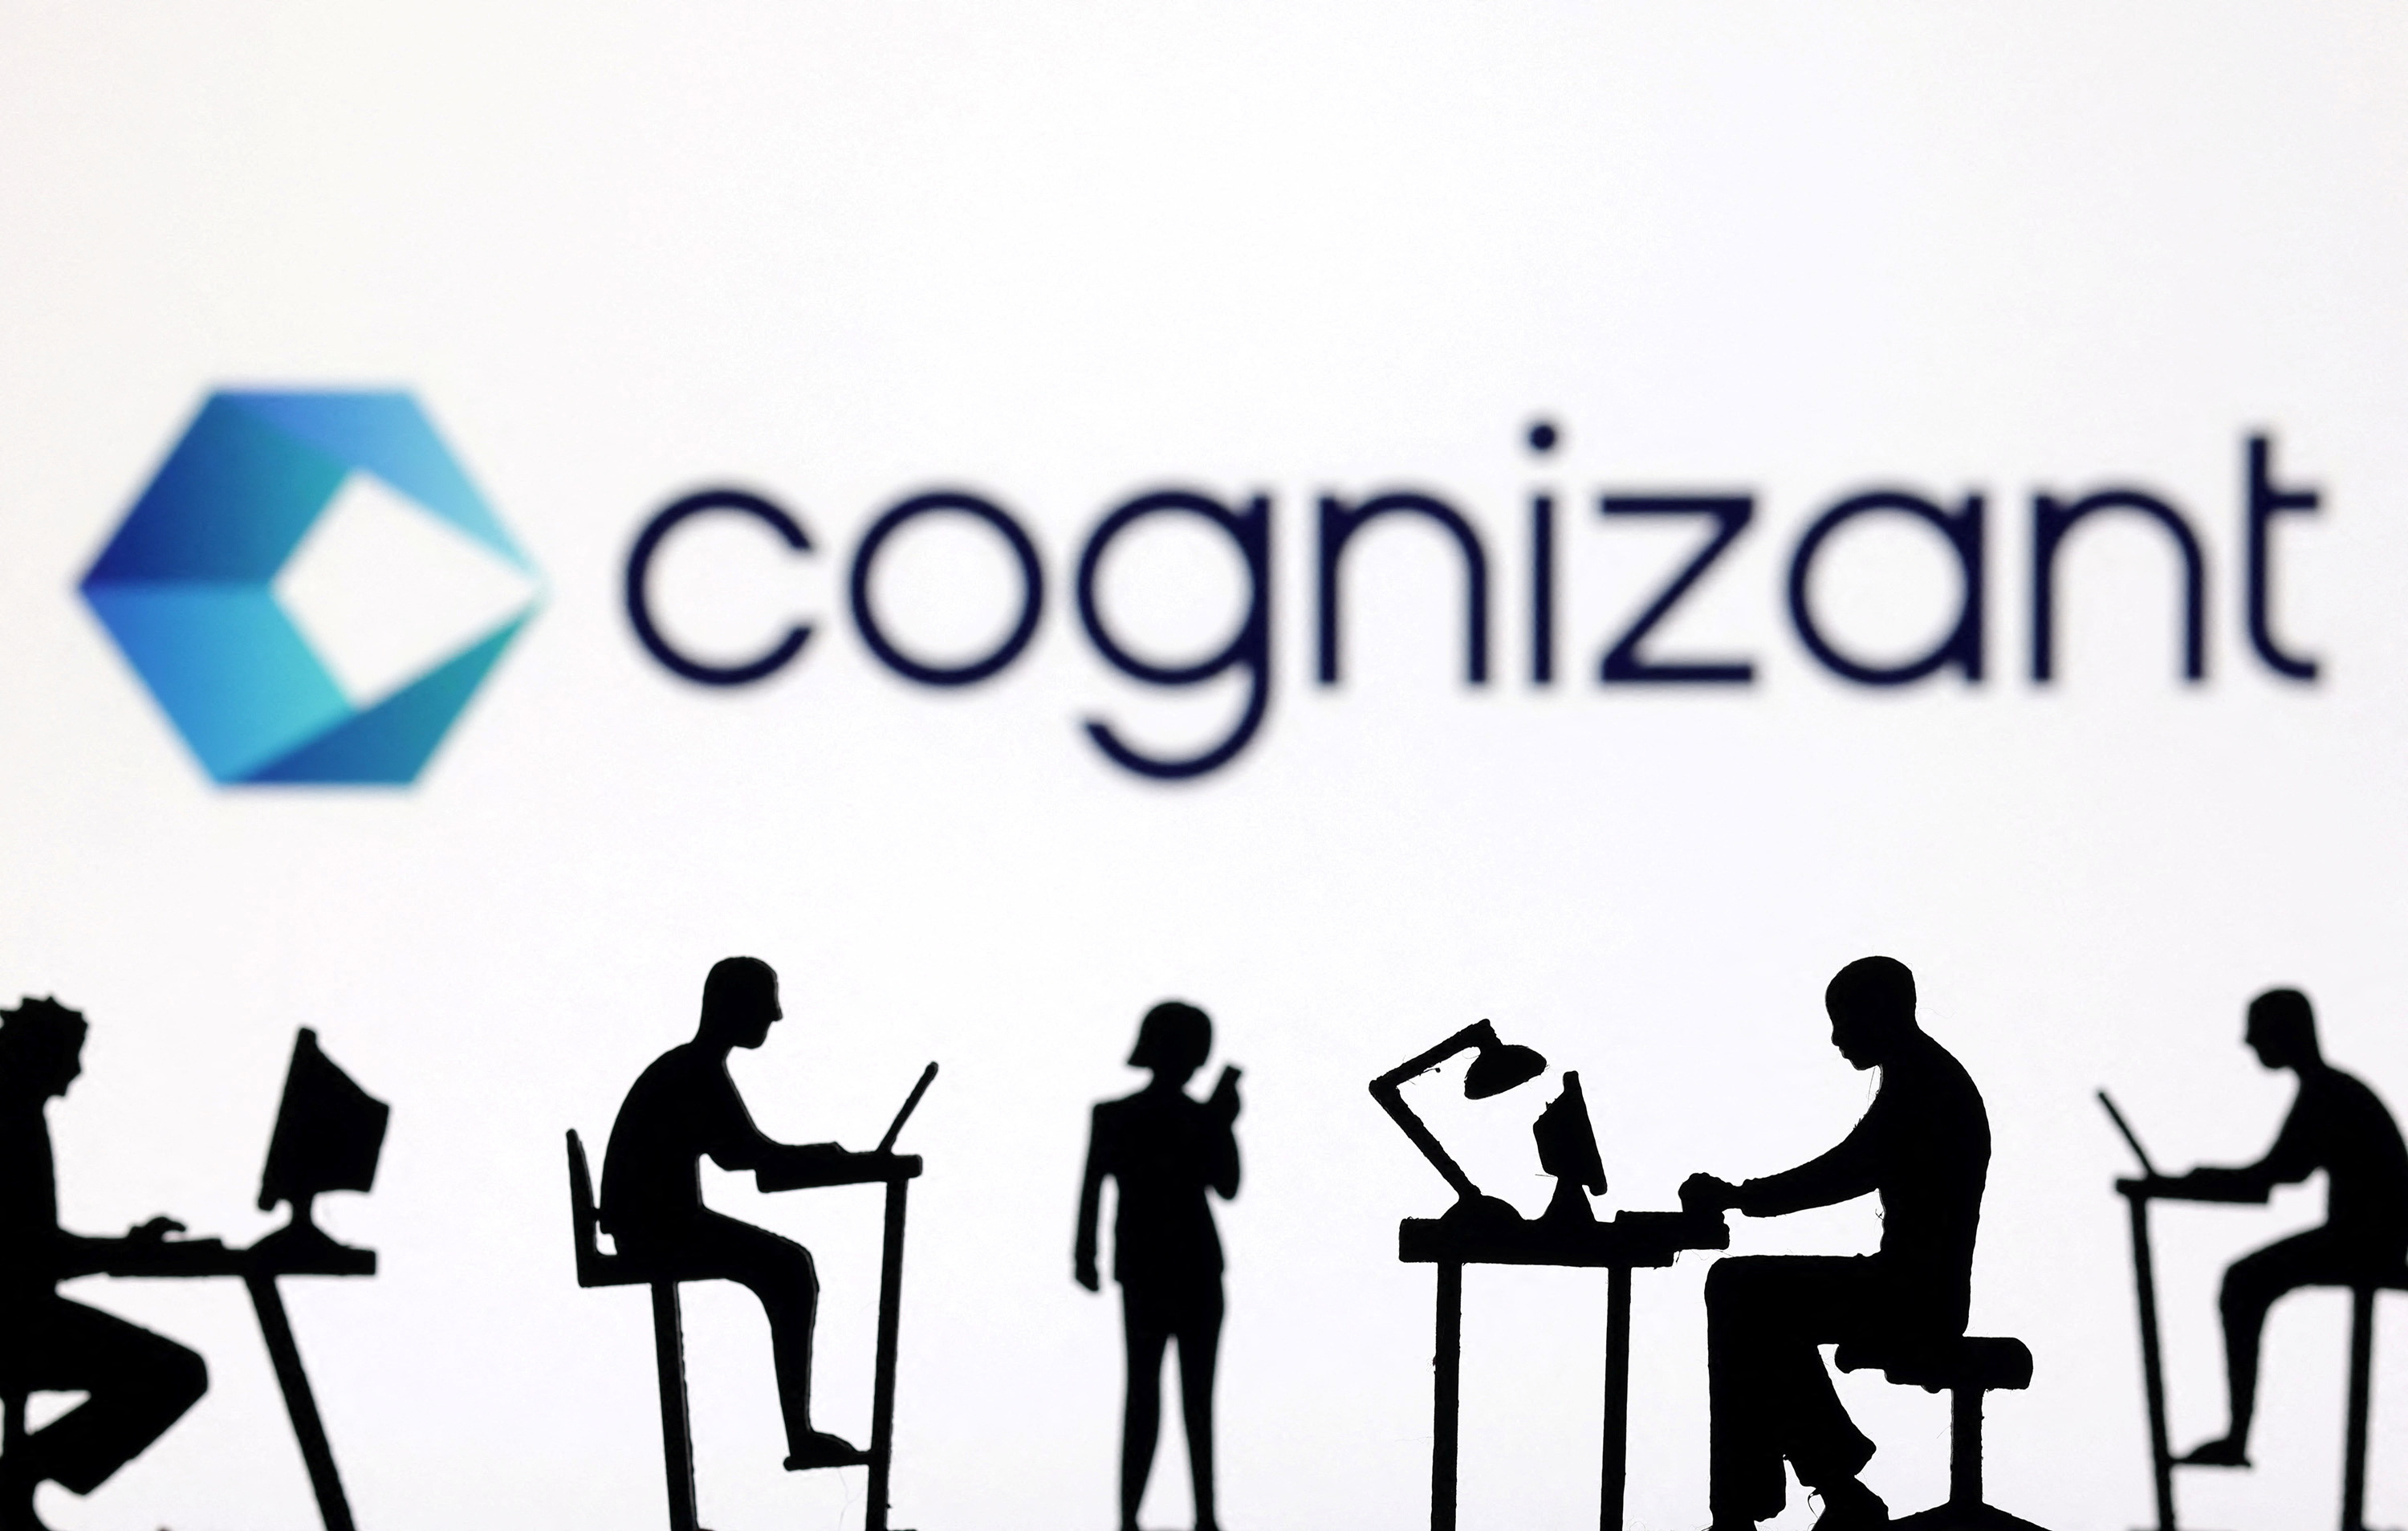 Illustration shows Cognizant logo